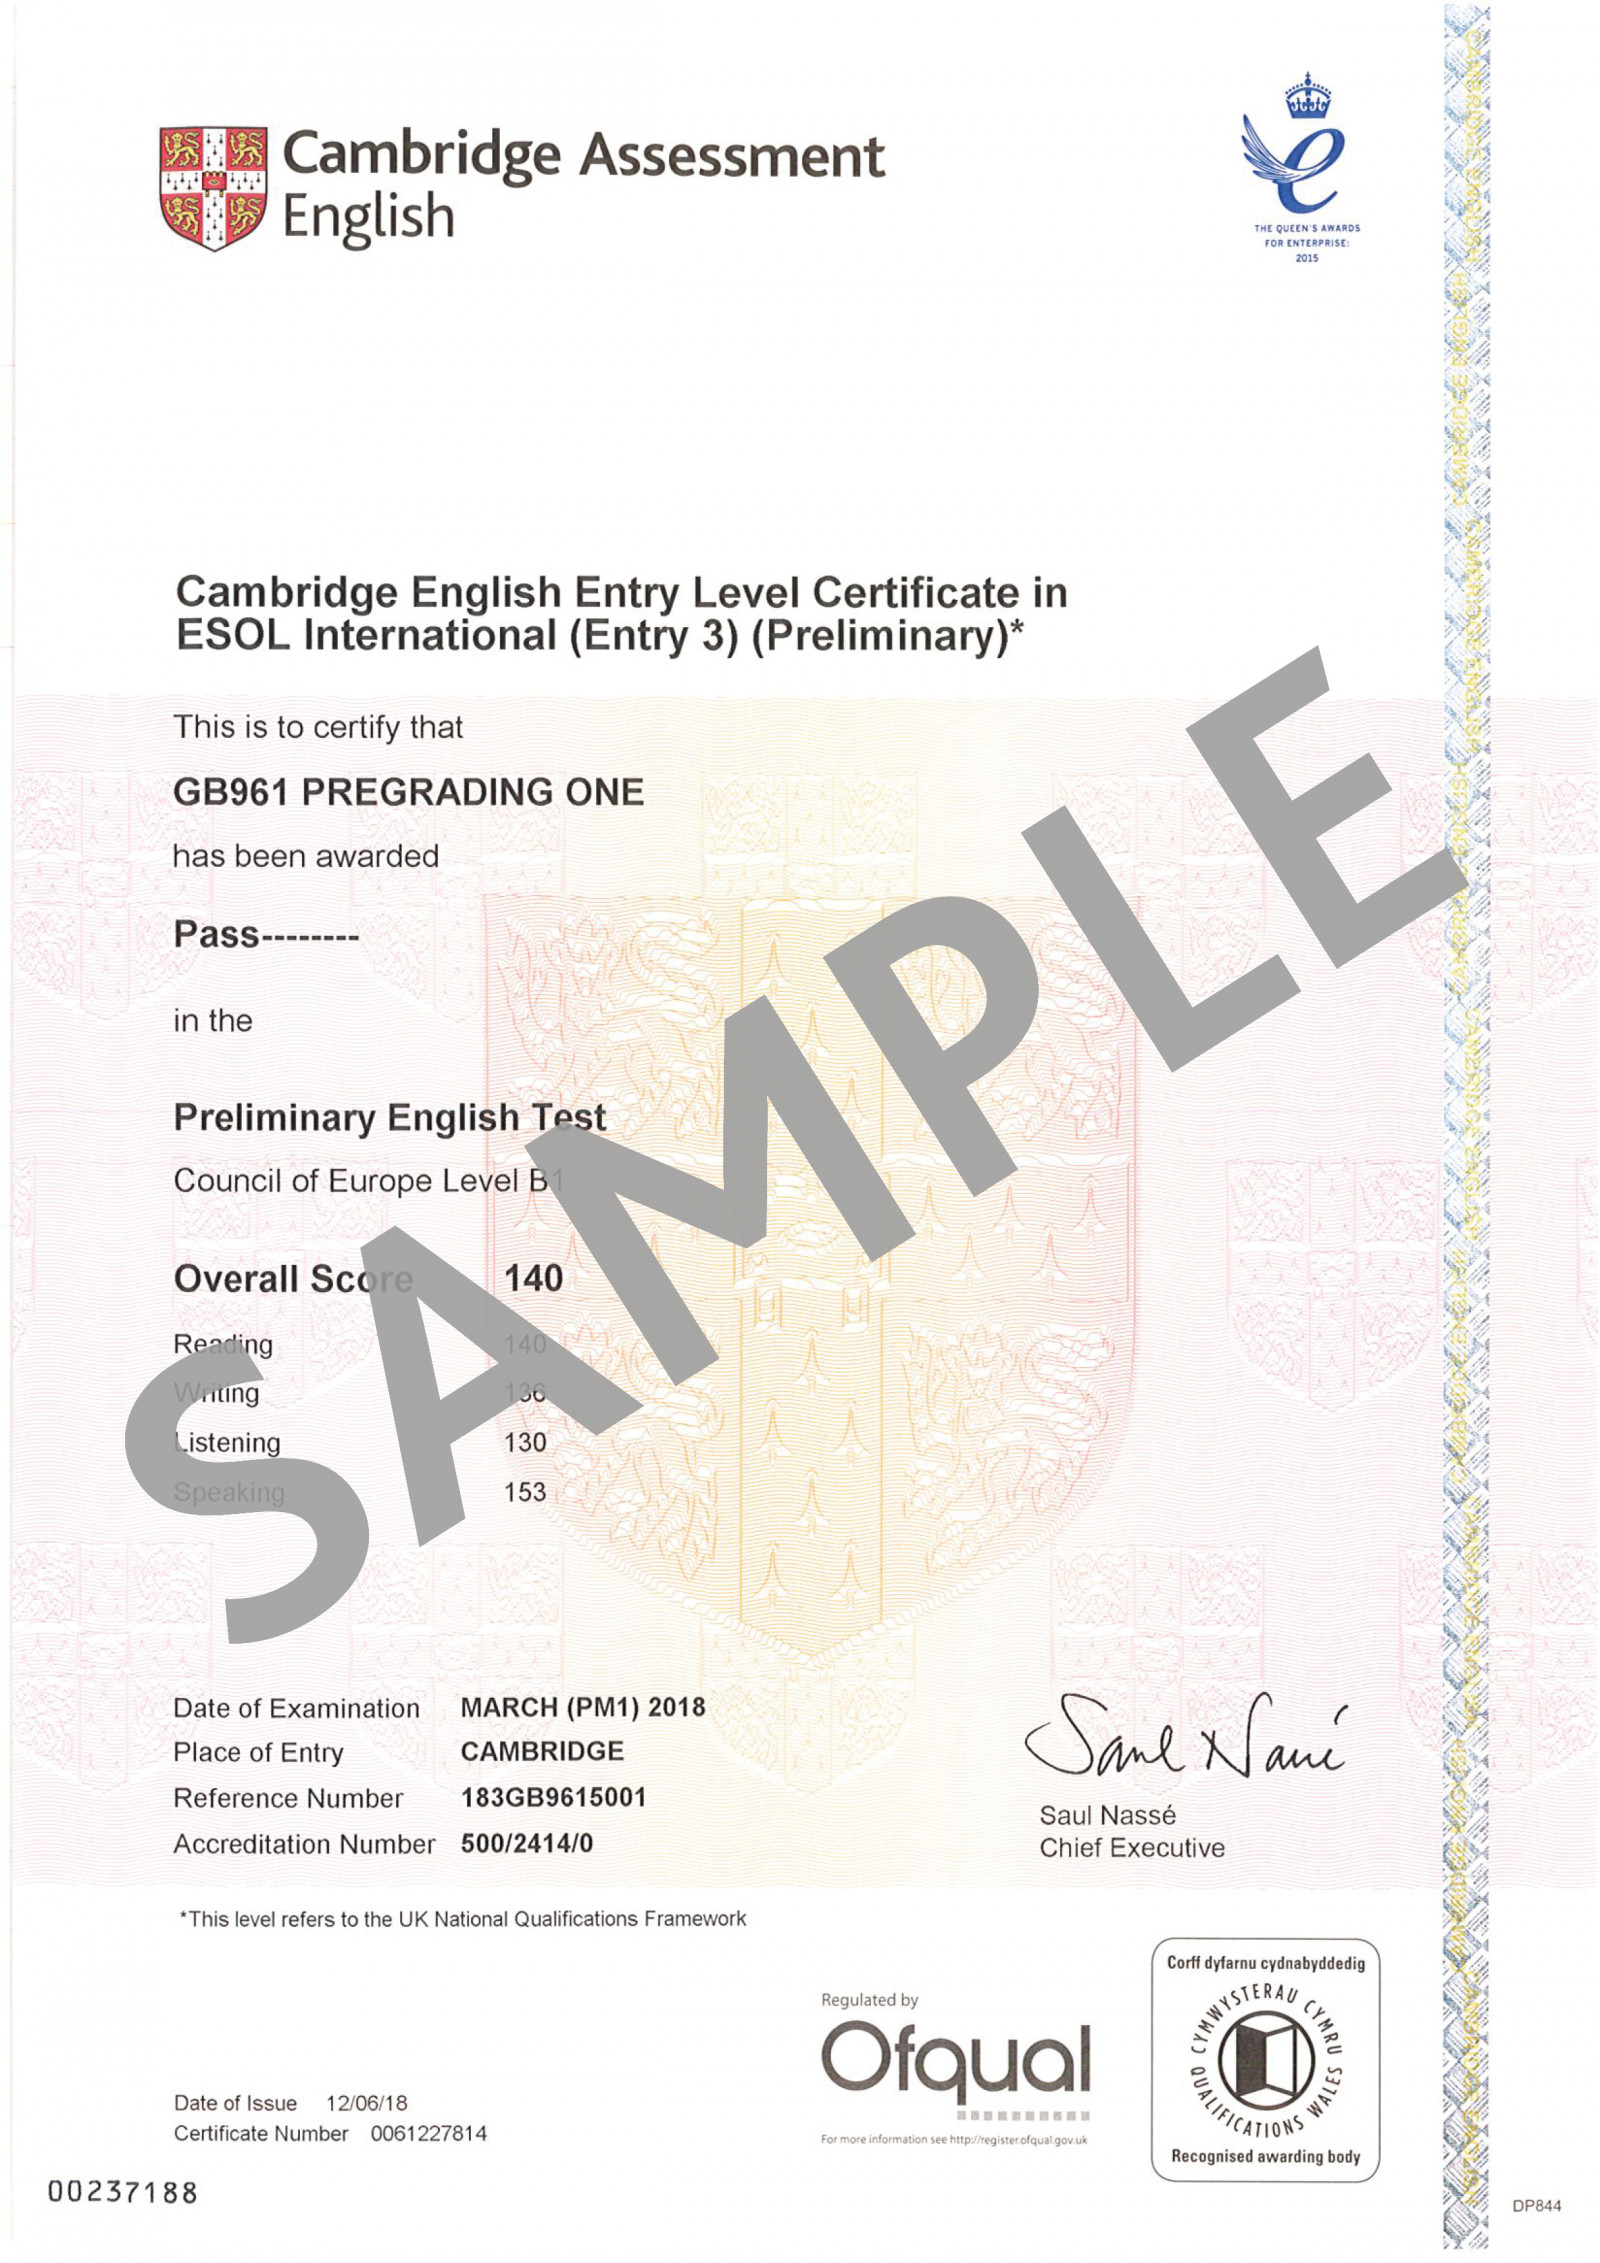 Cambridge Assessment English B1 Preliminary certificate